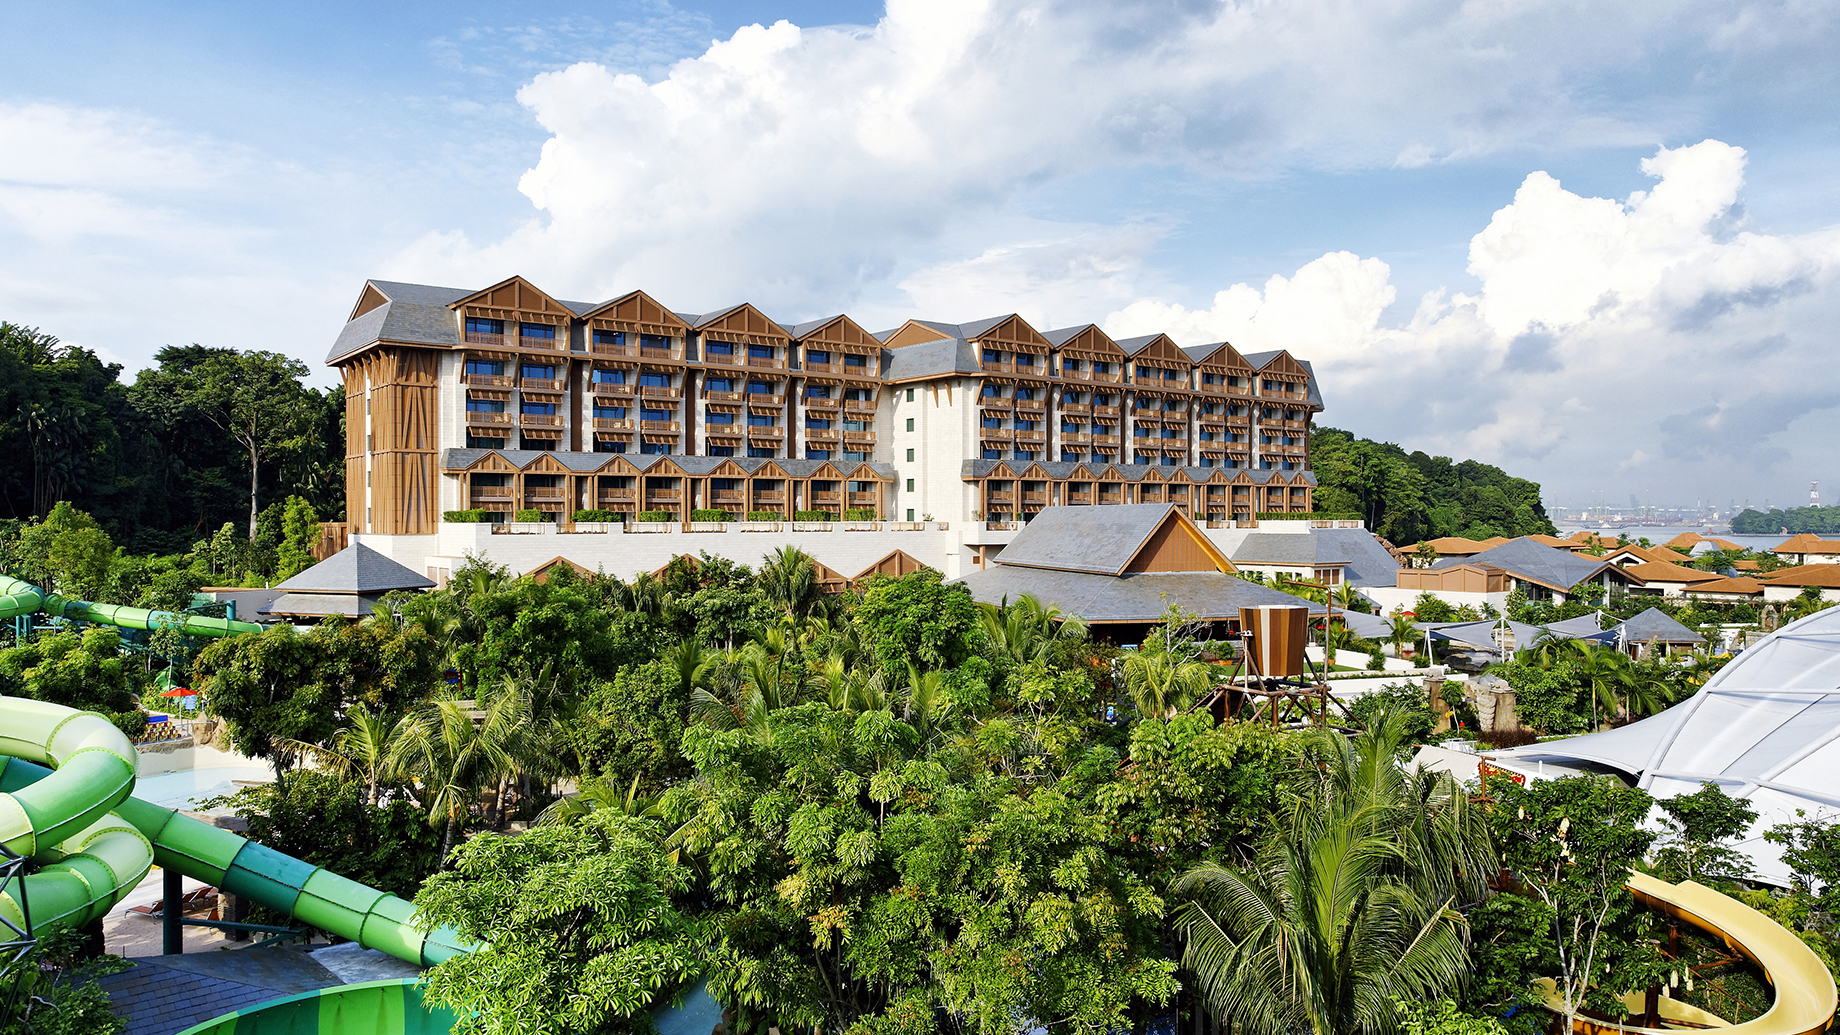 Equarius Hotel pictured beside Adventure Cove Waterpark